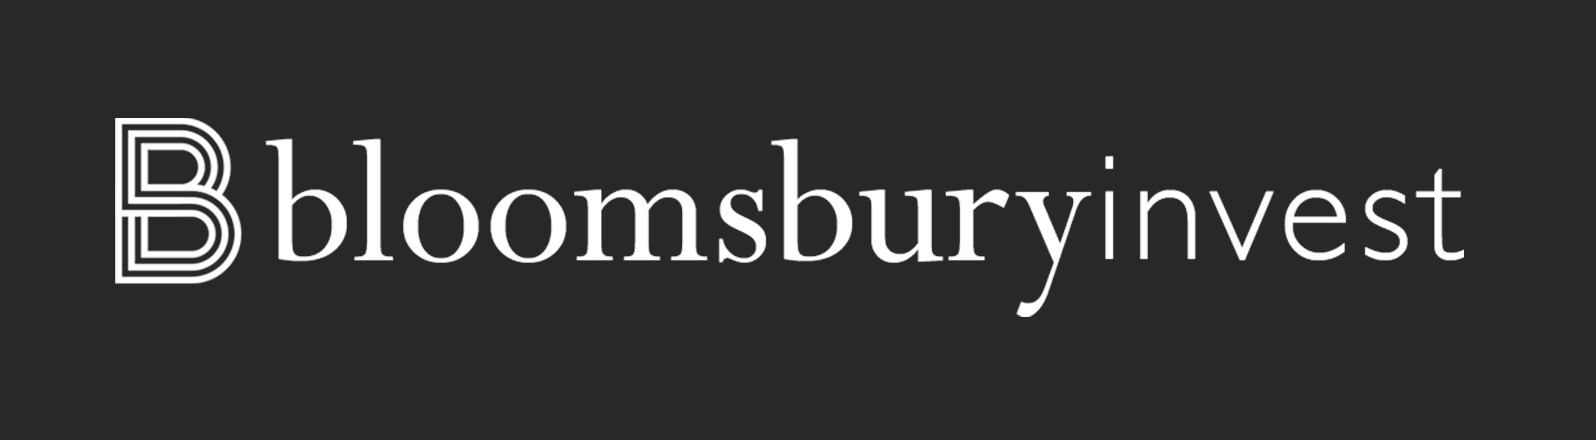 Cloudtal-Bloomsbury-Invest-Logo